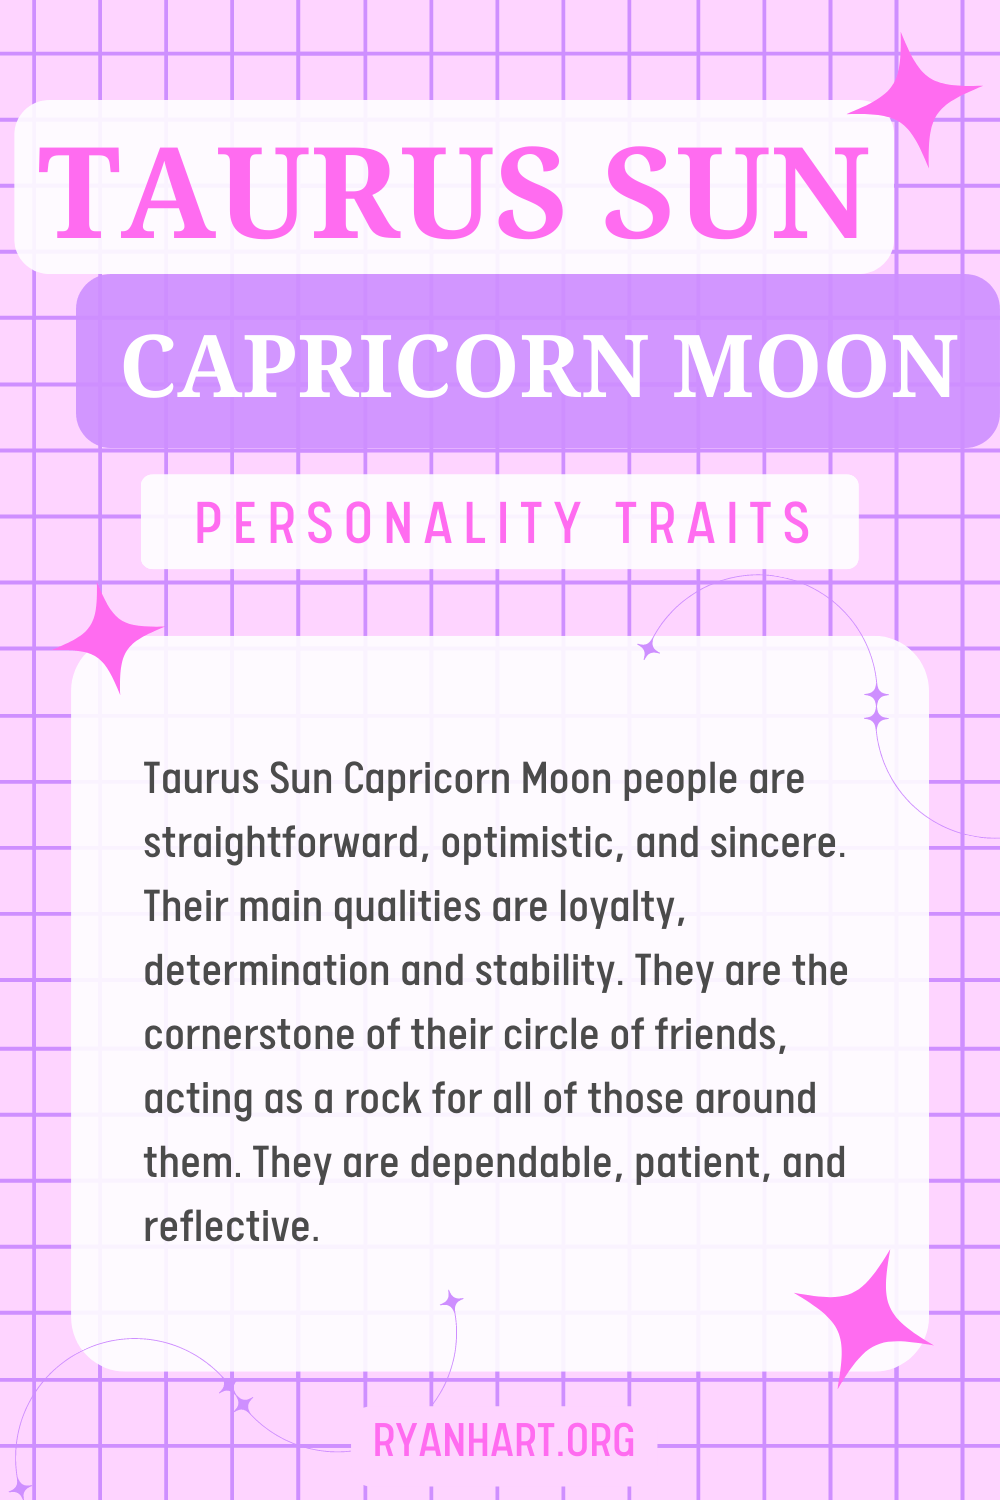 Taurus Sun Capricorn Moon Description